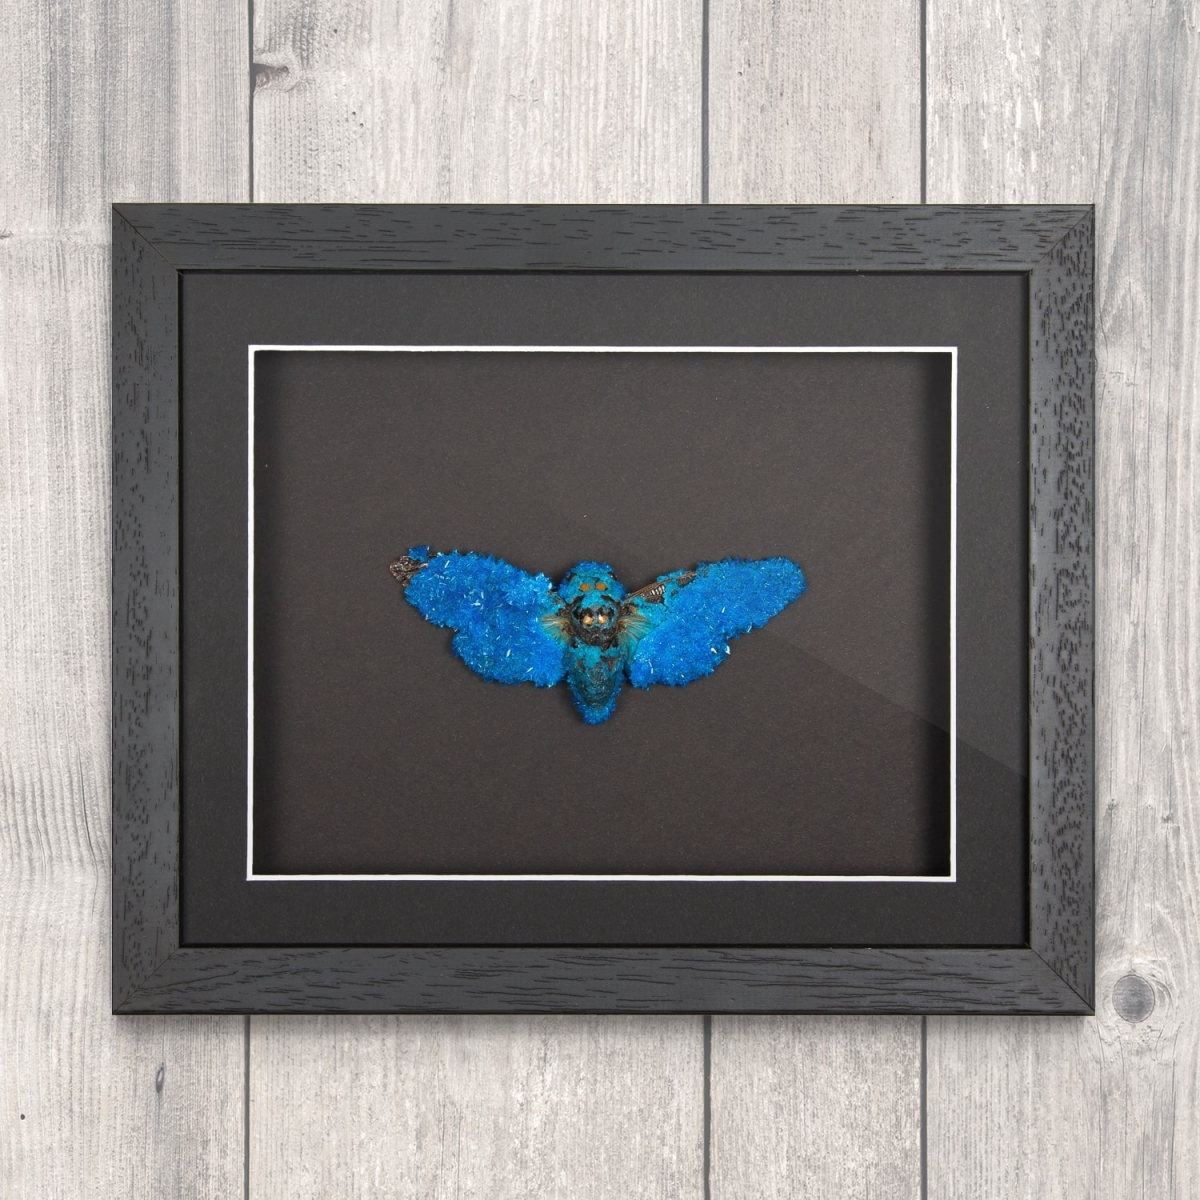 Minibeast Blue Cicada (Distantalna splendida) with Blue Crystals in Box Frame